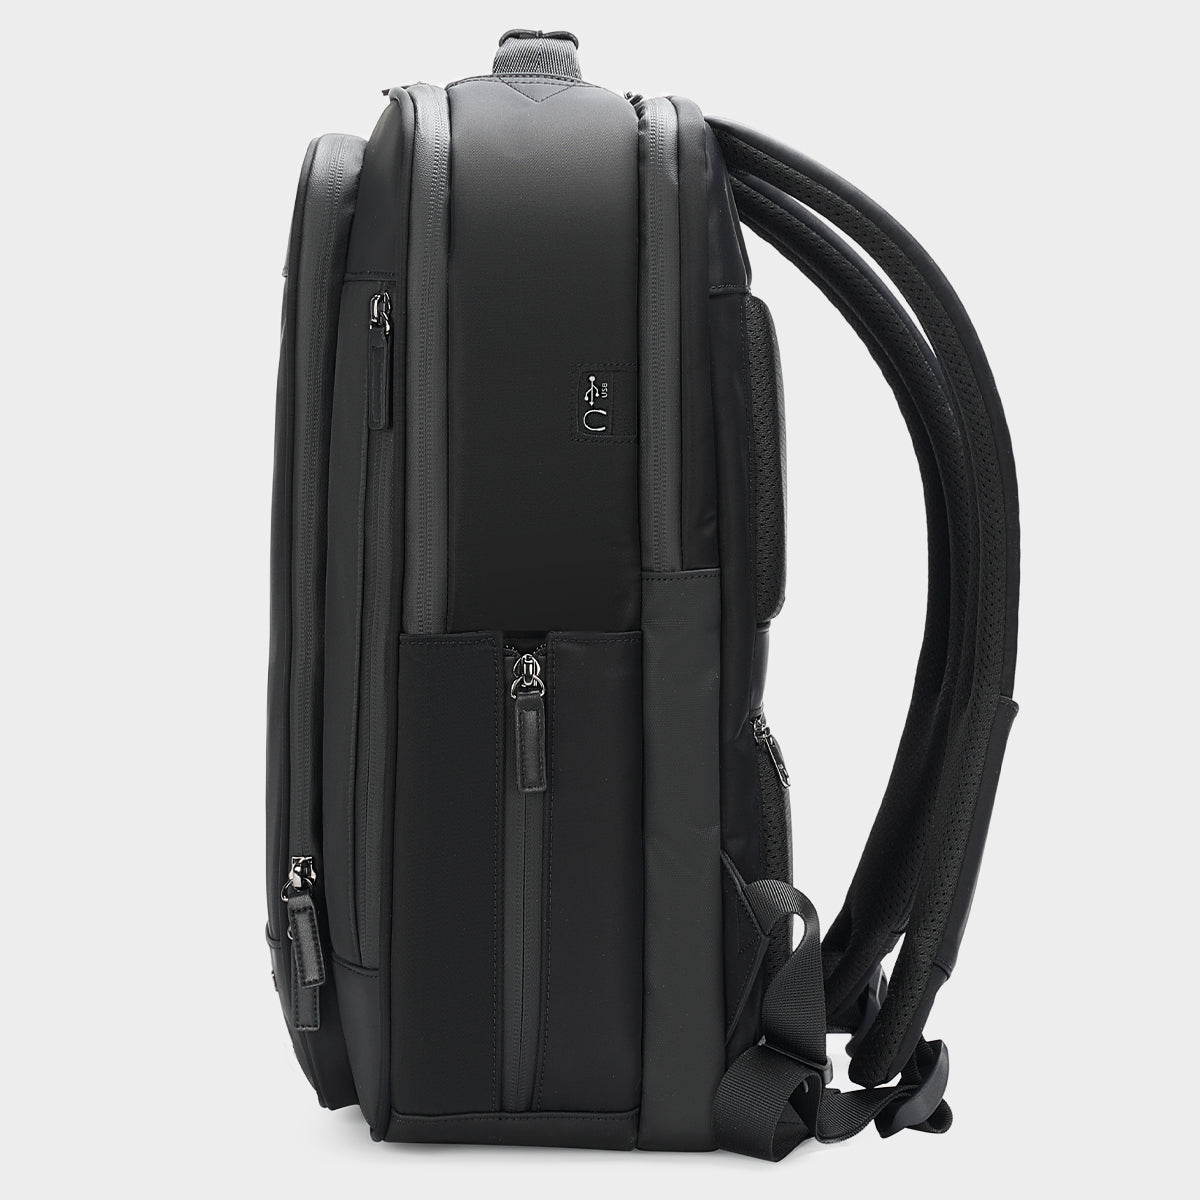 Tigernu T-B3985 Mens Women Unisex 15.6 inch Laptop Water Resistant Backpack Bag